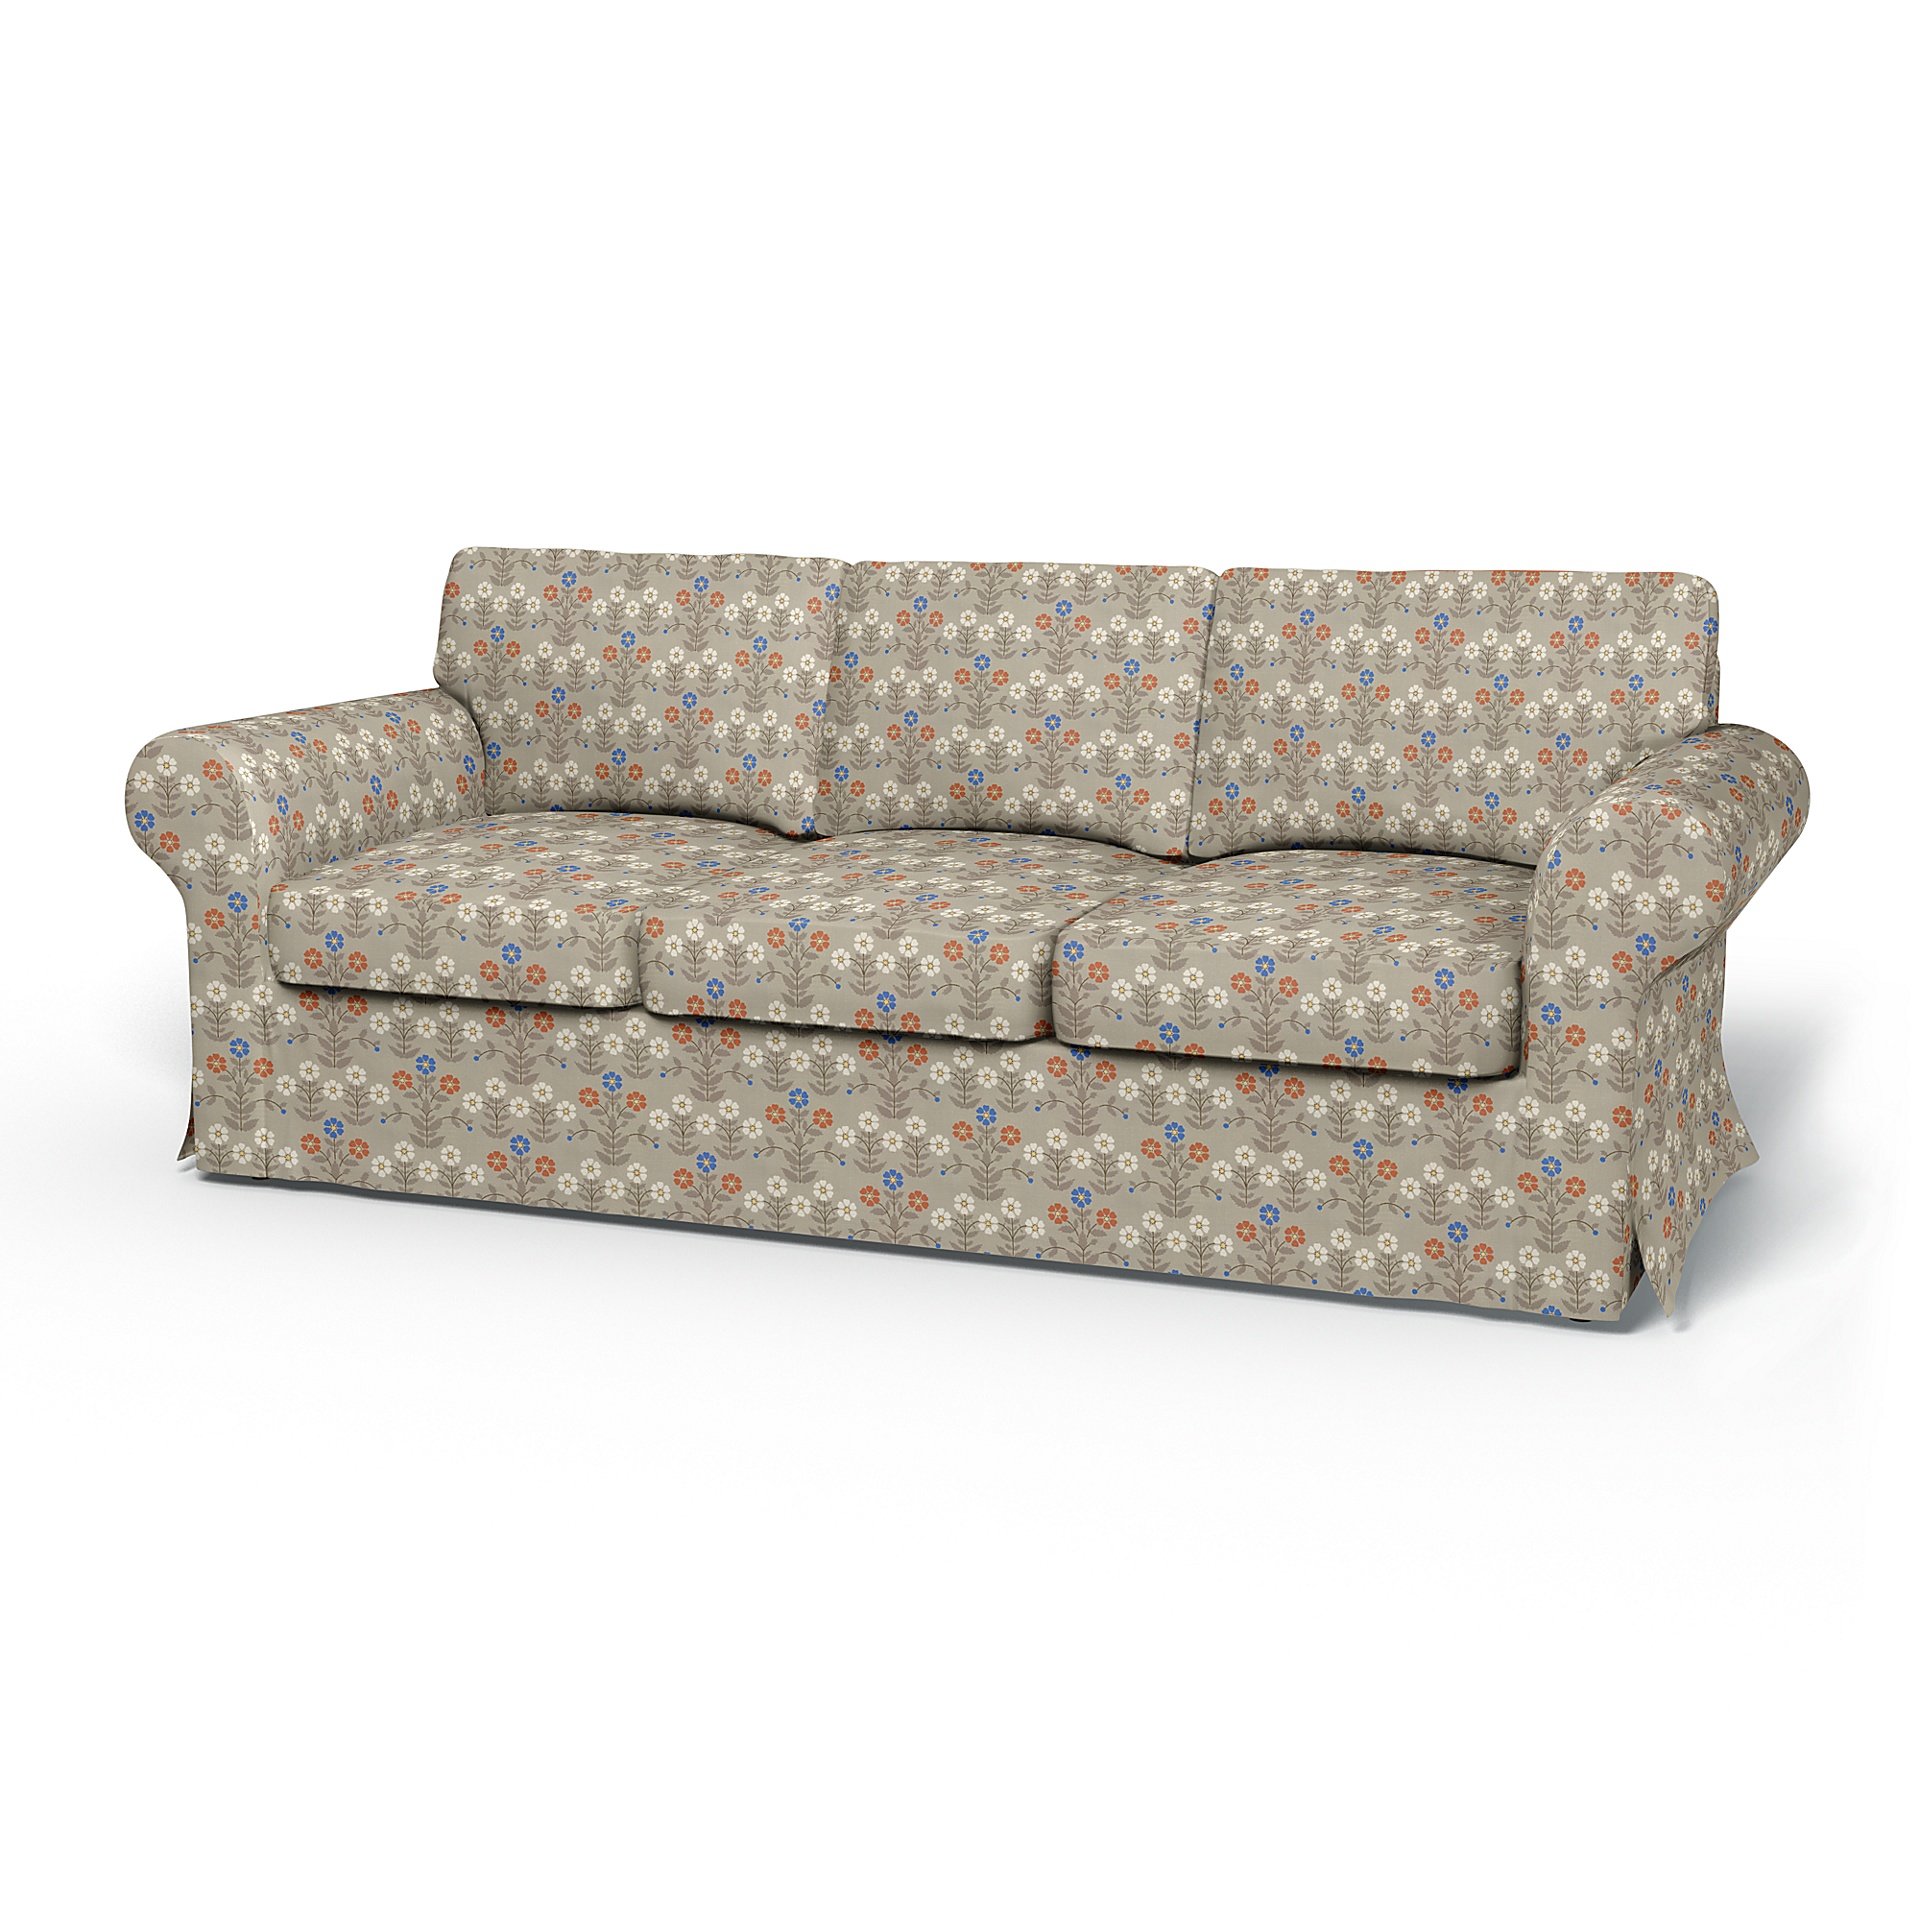 IKEA - Ektorp 3 Seater Sofa Bed Cover, Sippor Blue/Orange, BEMZ x BORASTAPETER COLLECTION - Bemz